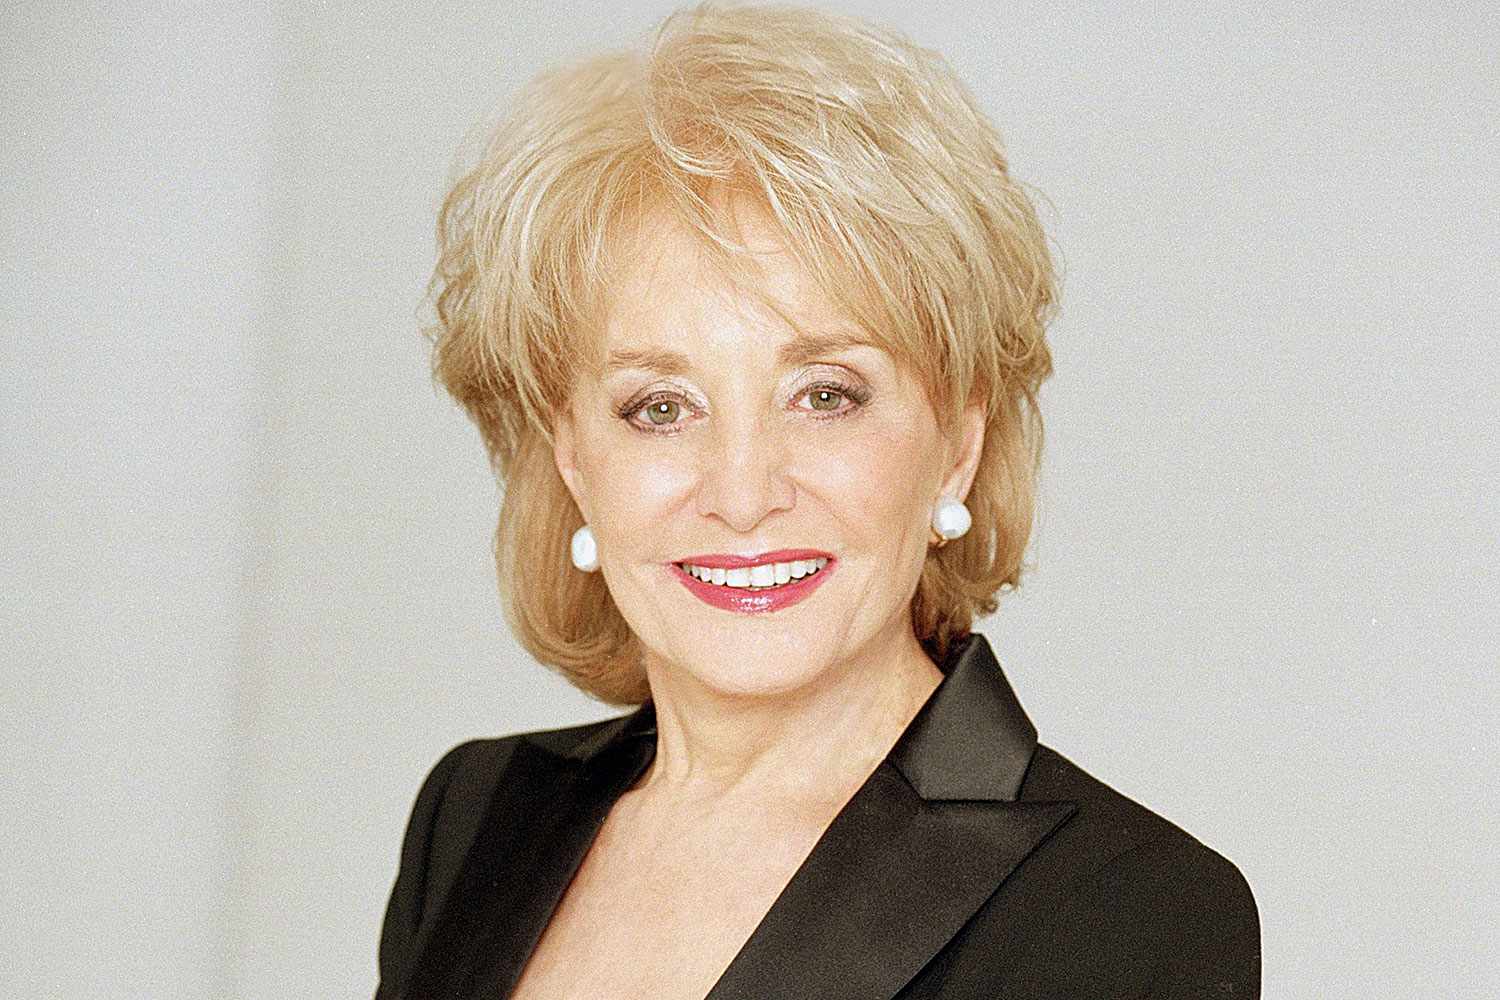 Barbara Walters Plastic Surgery: Botox and Fillers